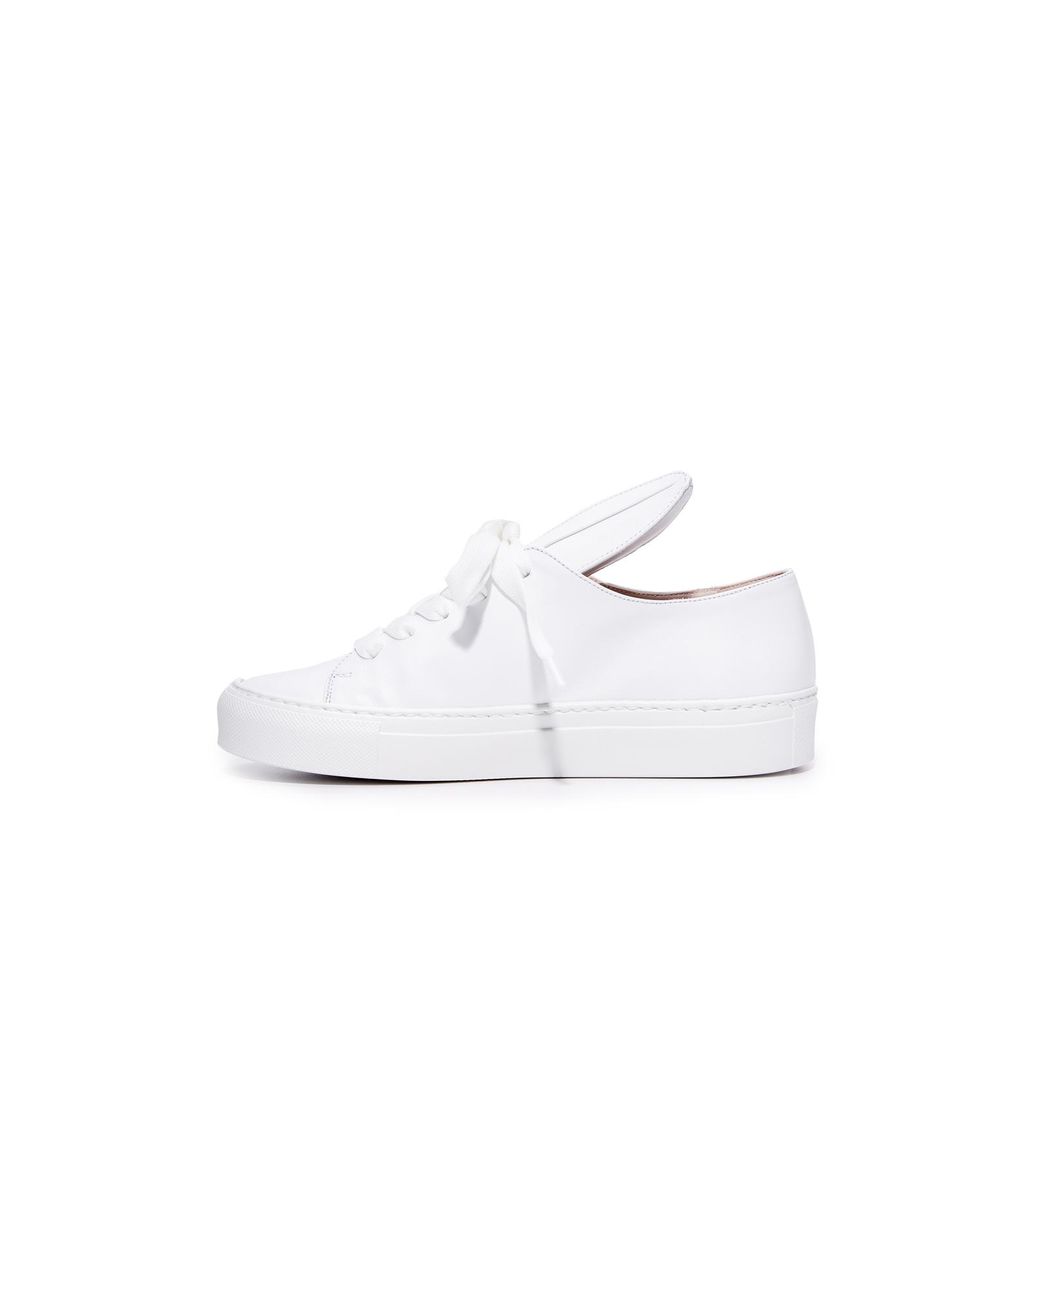 Minna Parikka All Ears Sneakers in White | Lyst